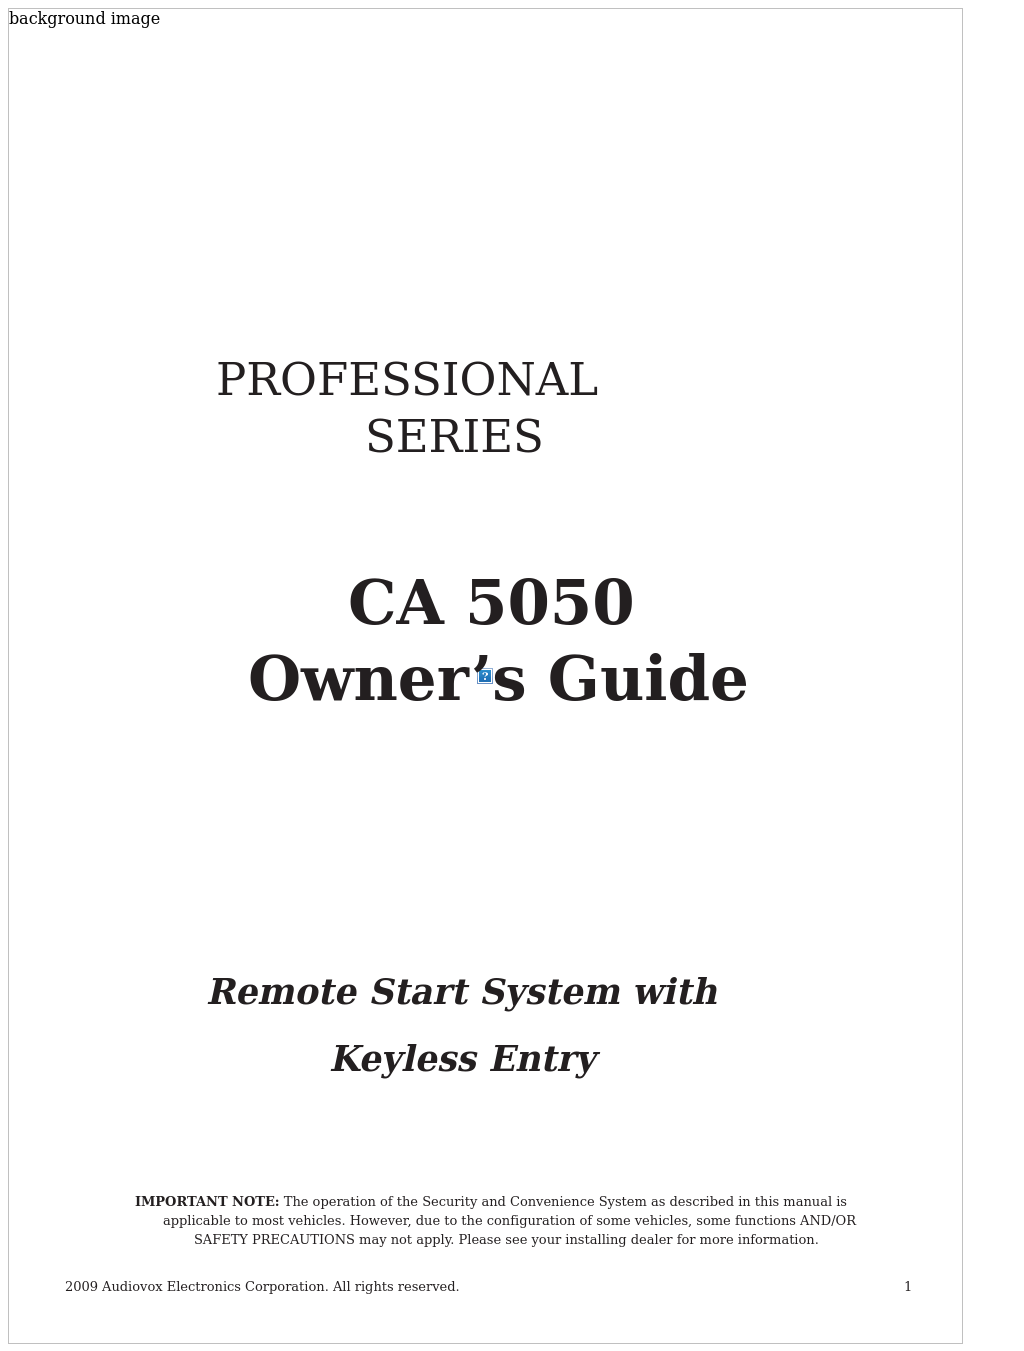 Professional Series CA 5050